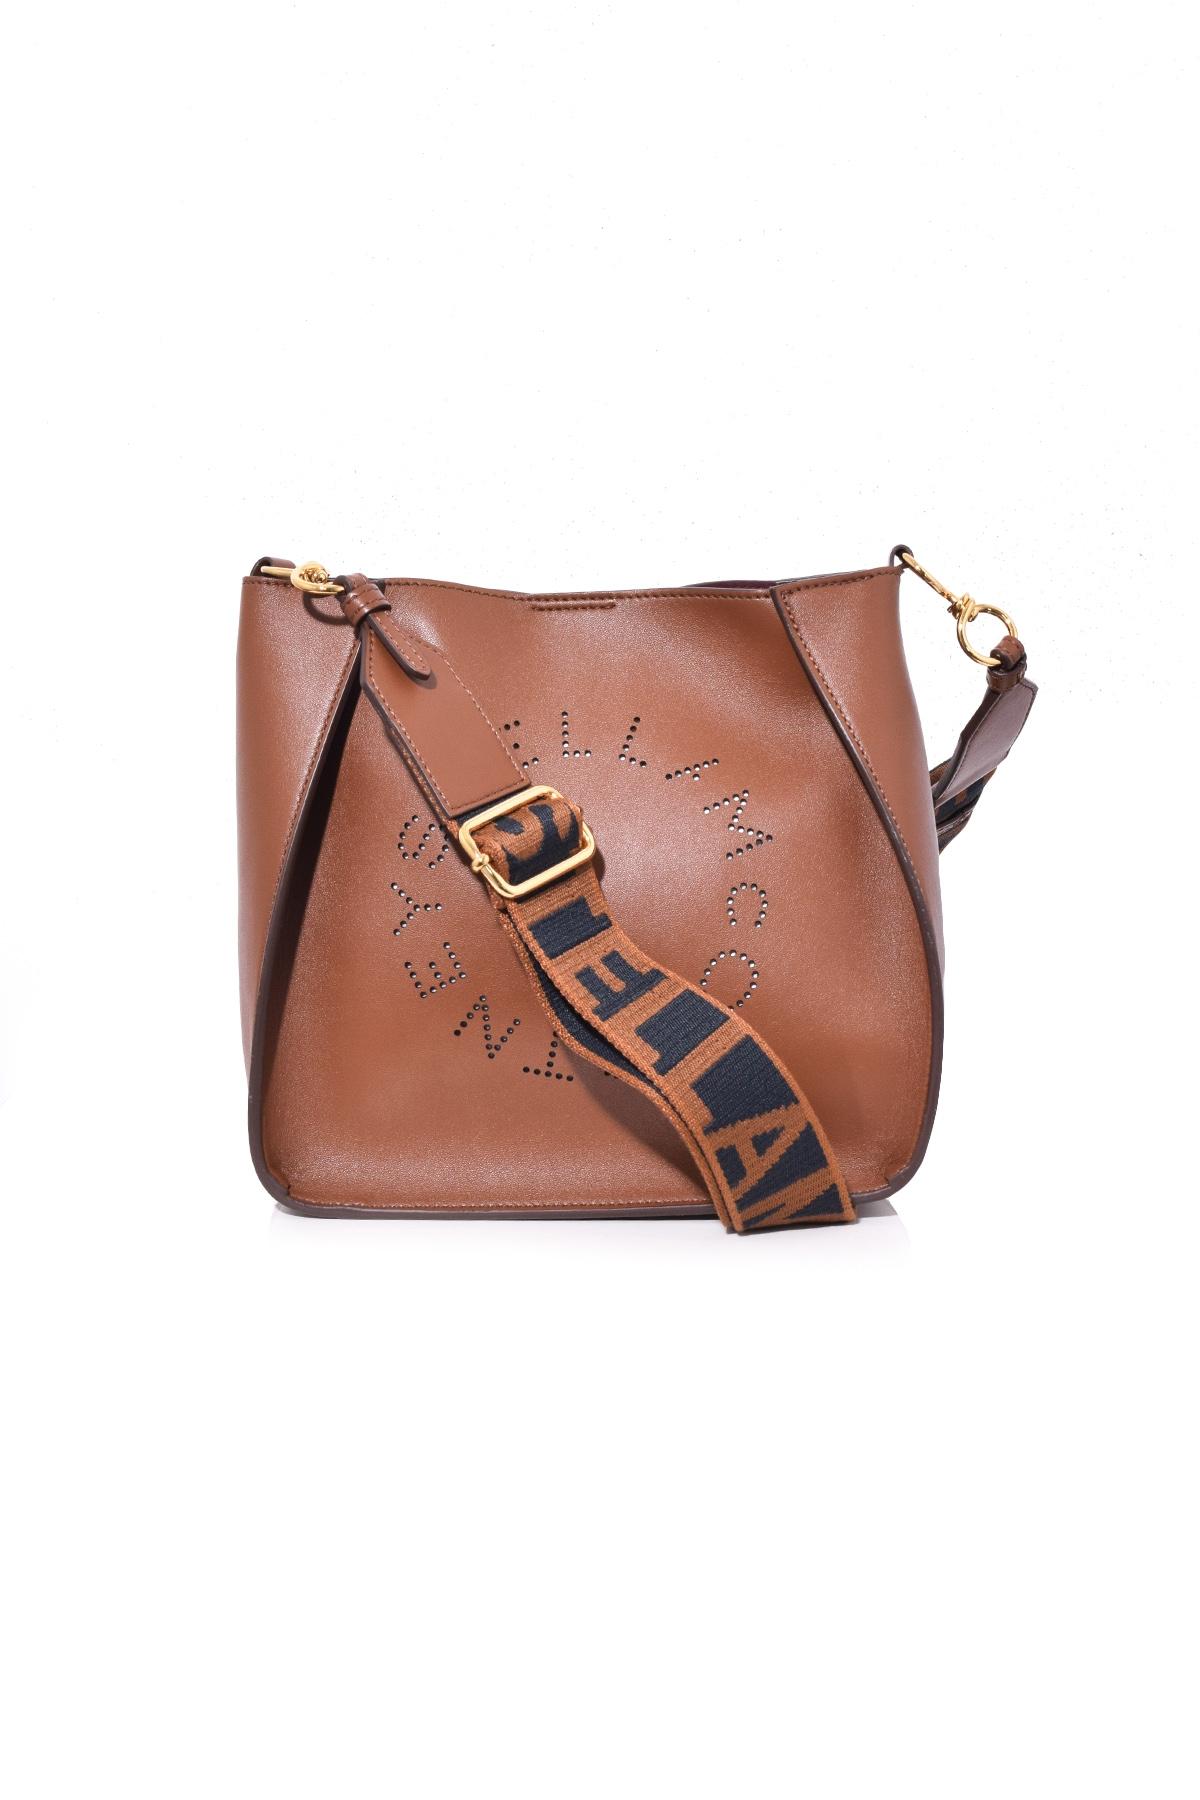 Stella McCartney Mini Crossbody Logo Bag In Cinnamon in Brown - Lyst